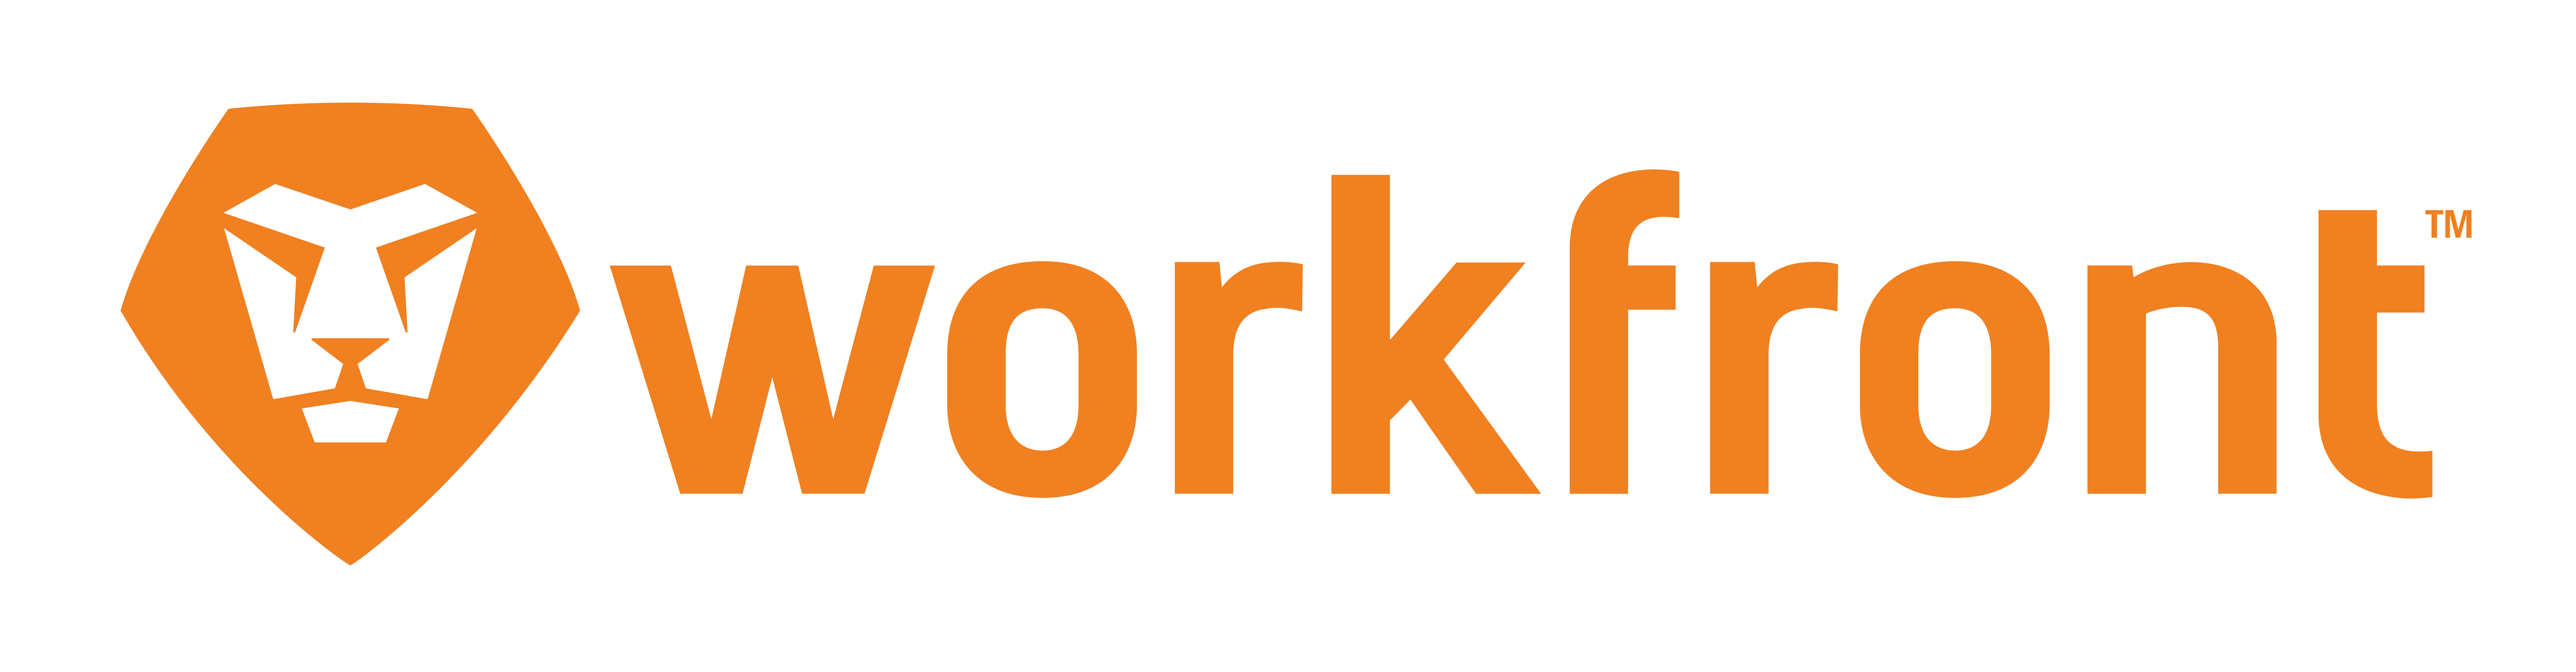 Adobe Workfront logo, one of the best work management software of 2022